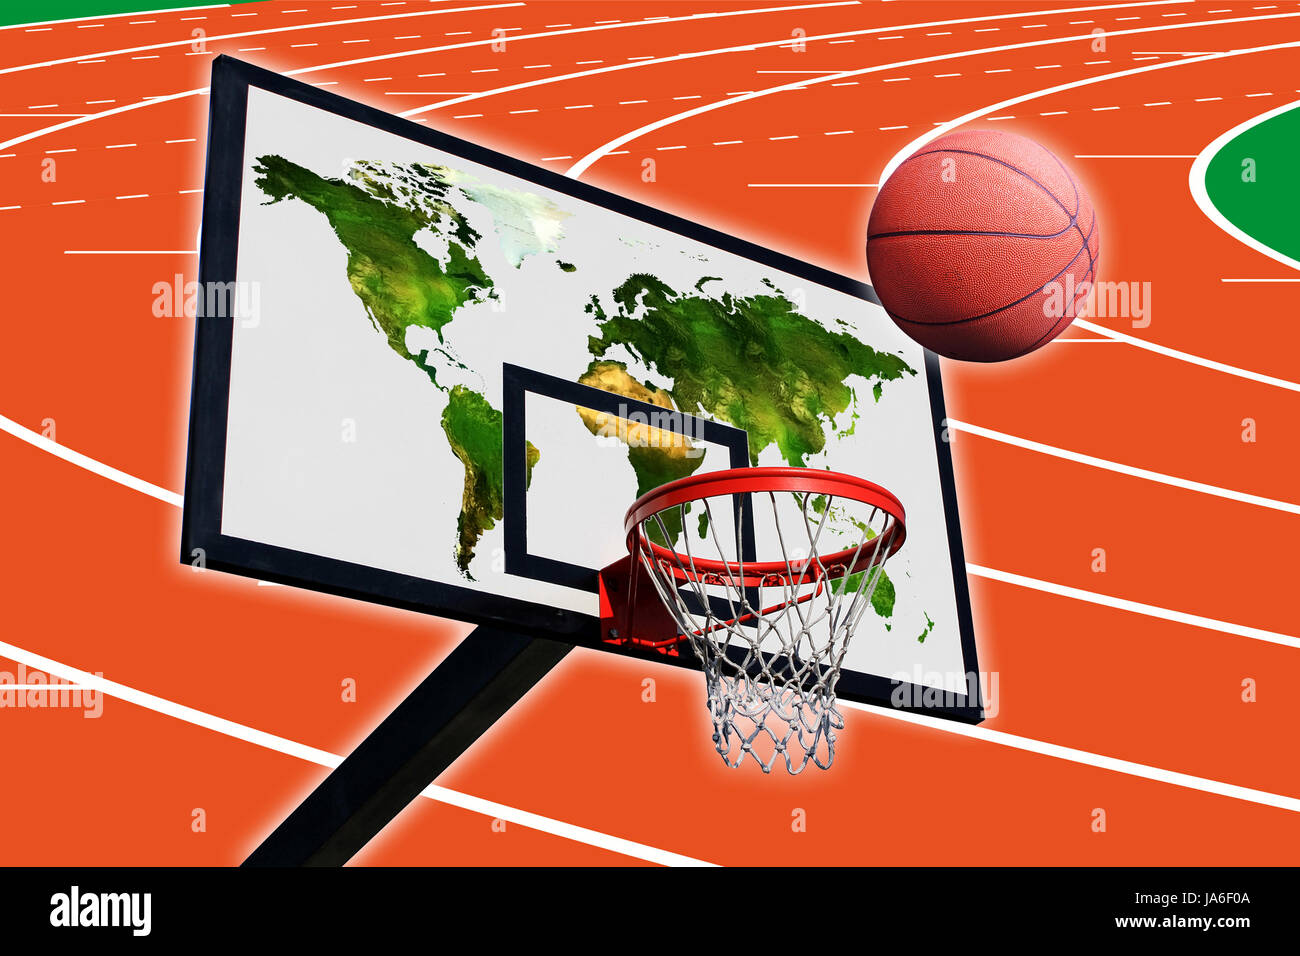 ball, goal, passage, gate, archgway, gantry, basket, aim, sport, basketball  Stock Photo - Alamy